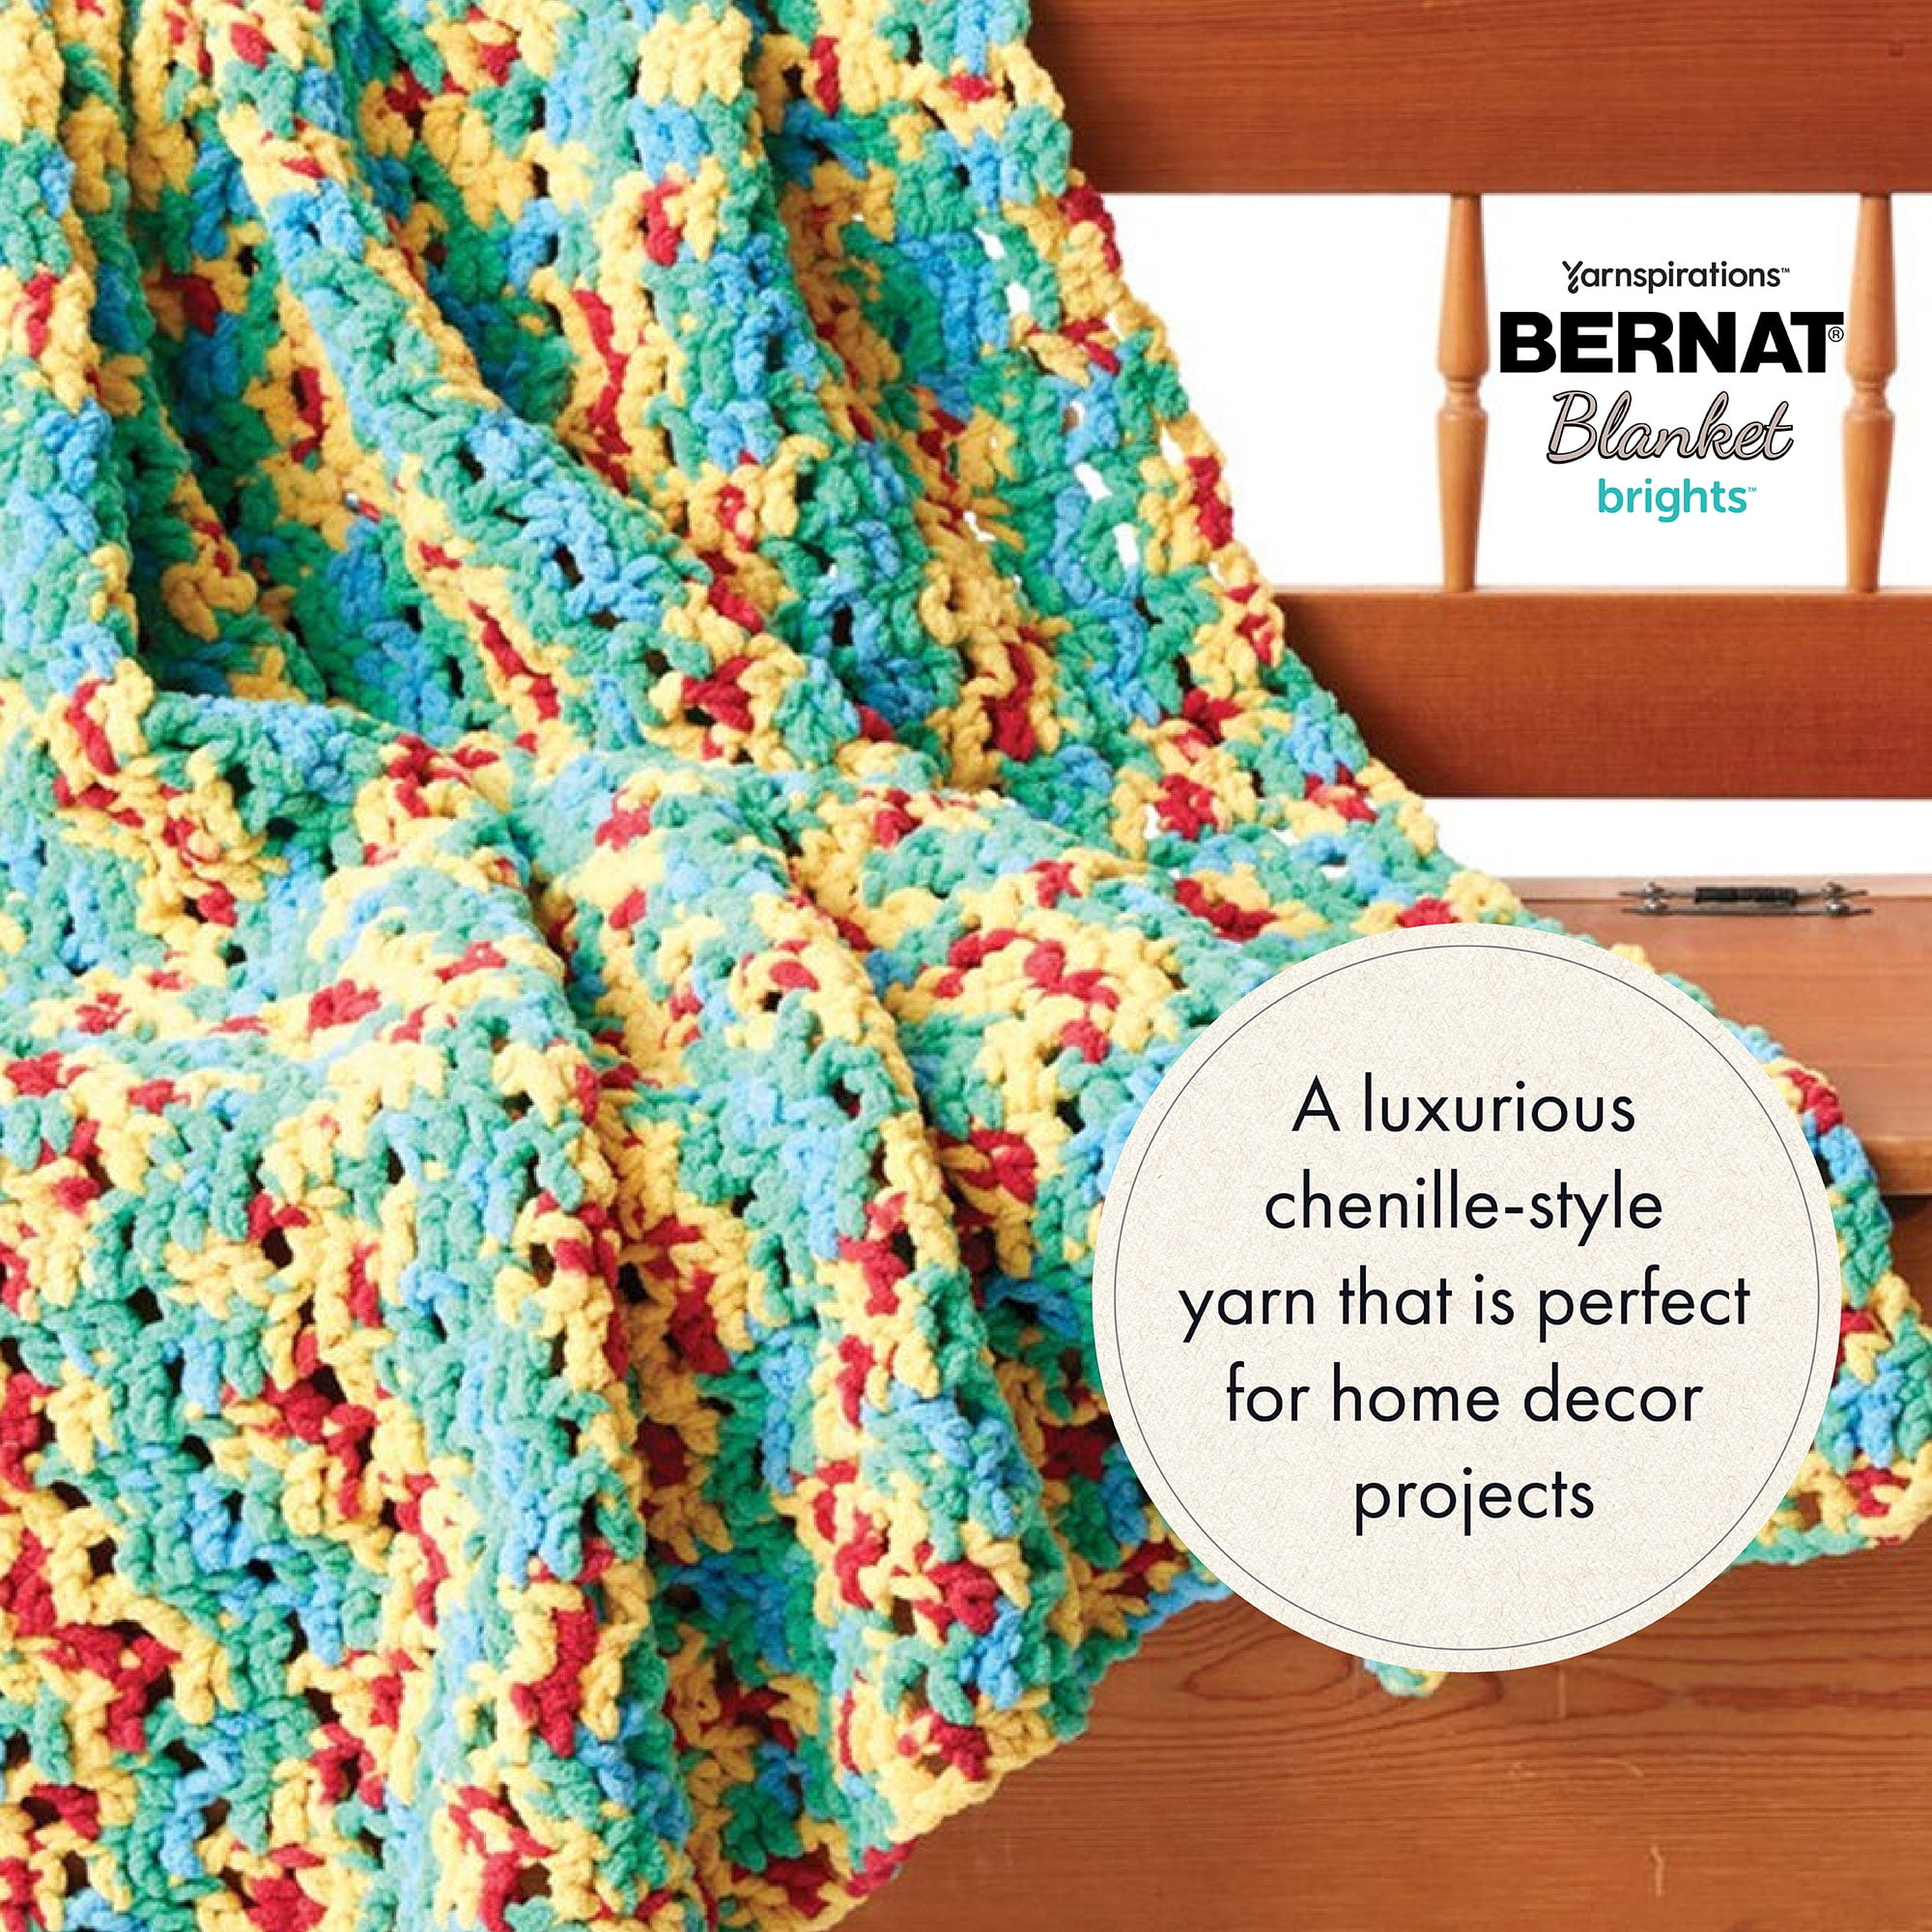 Bernat Blanket Brights Big Ball Yarn-Royal Blue, 1 count - Fry's Food Stores